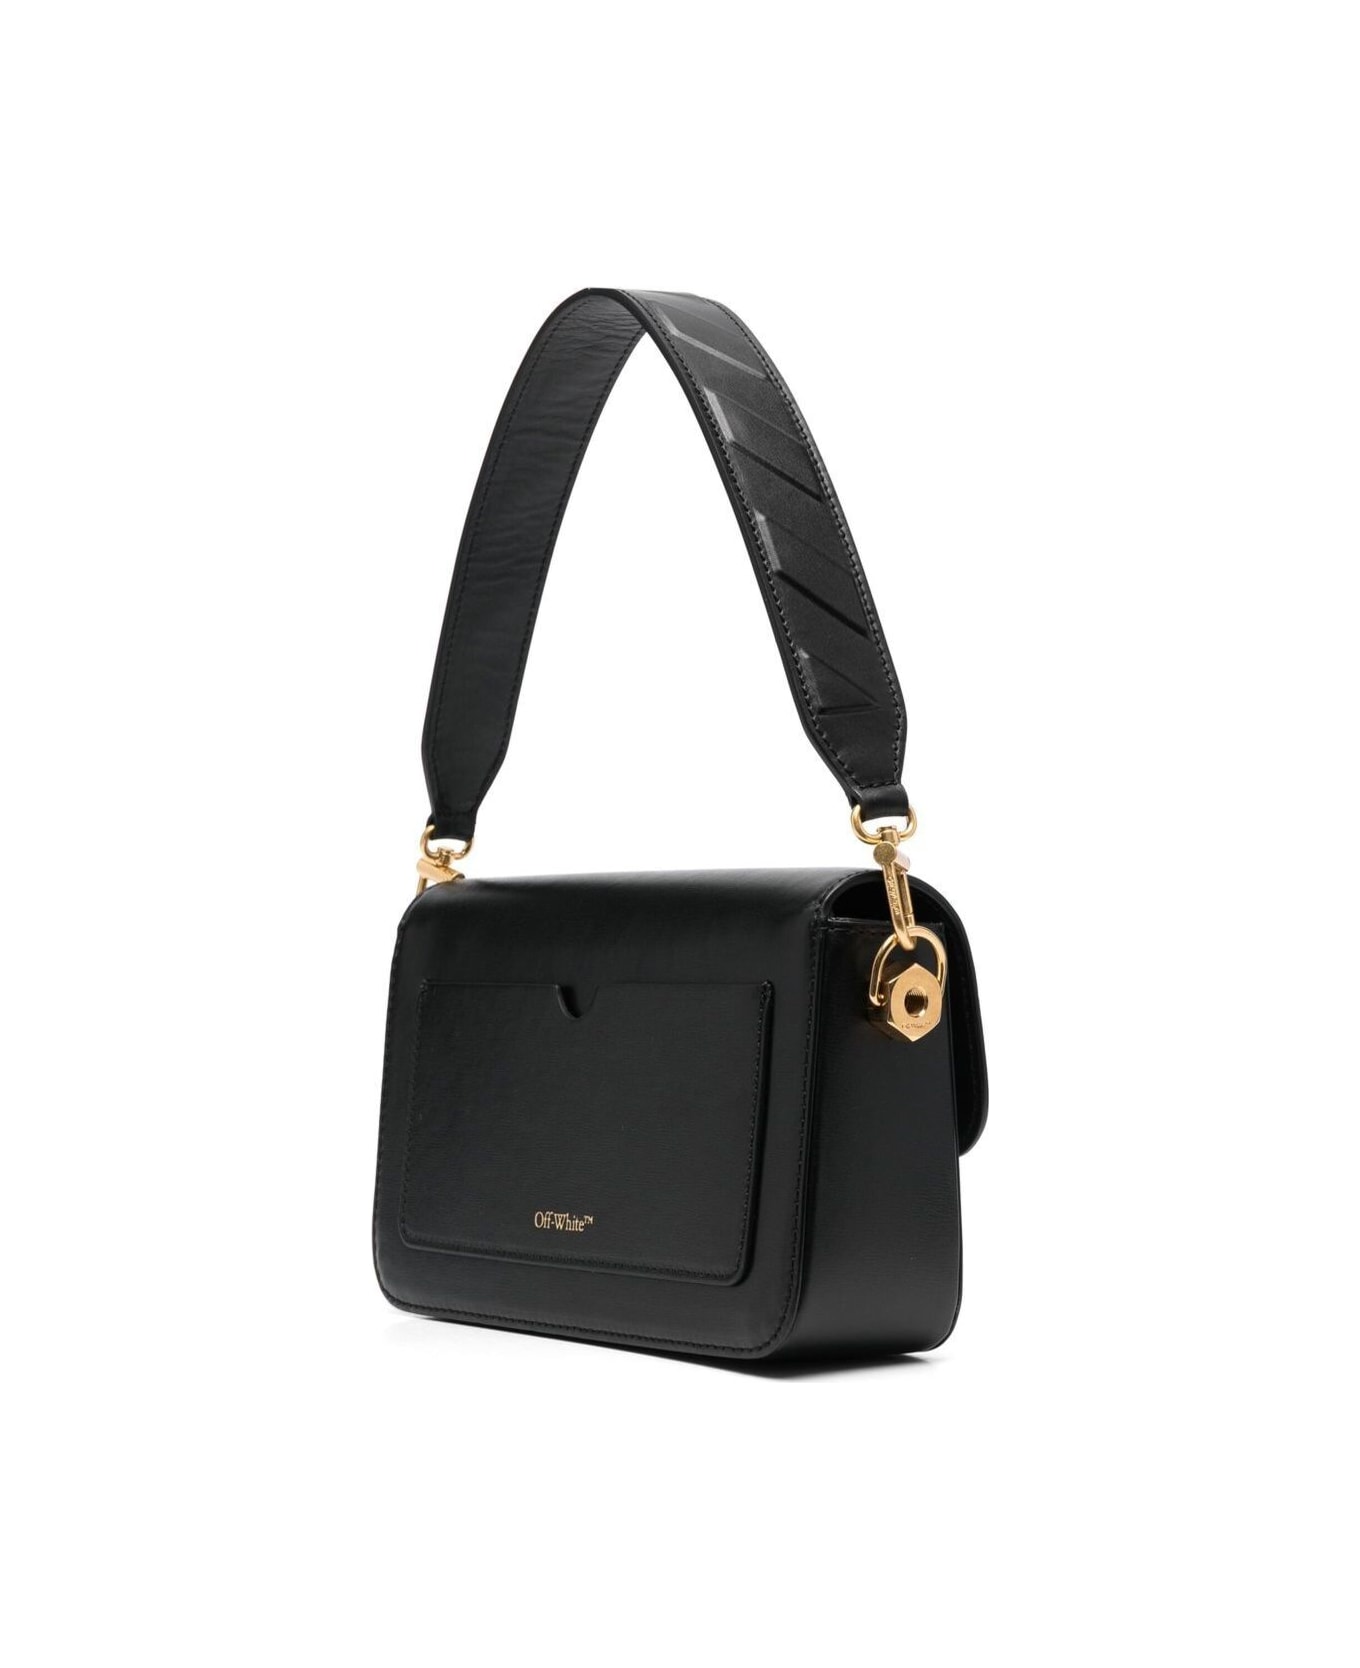 Off-White Binder Clip Crossbody Bag In Black Leather Woman - Black